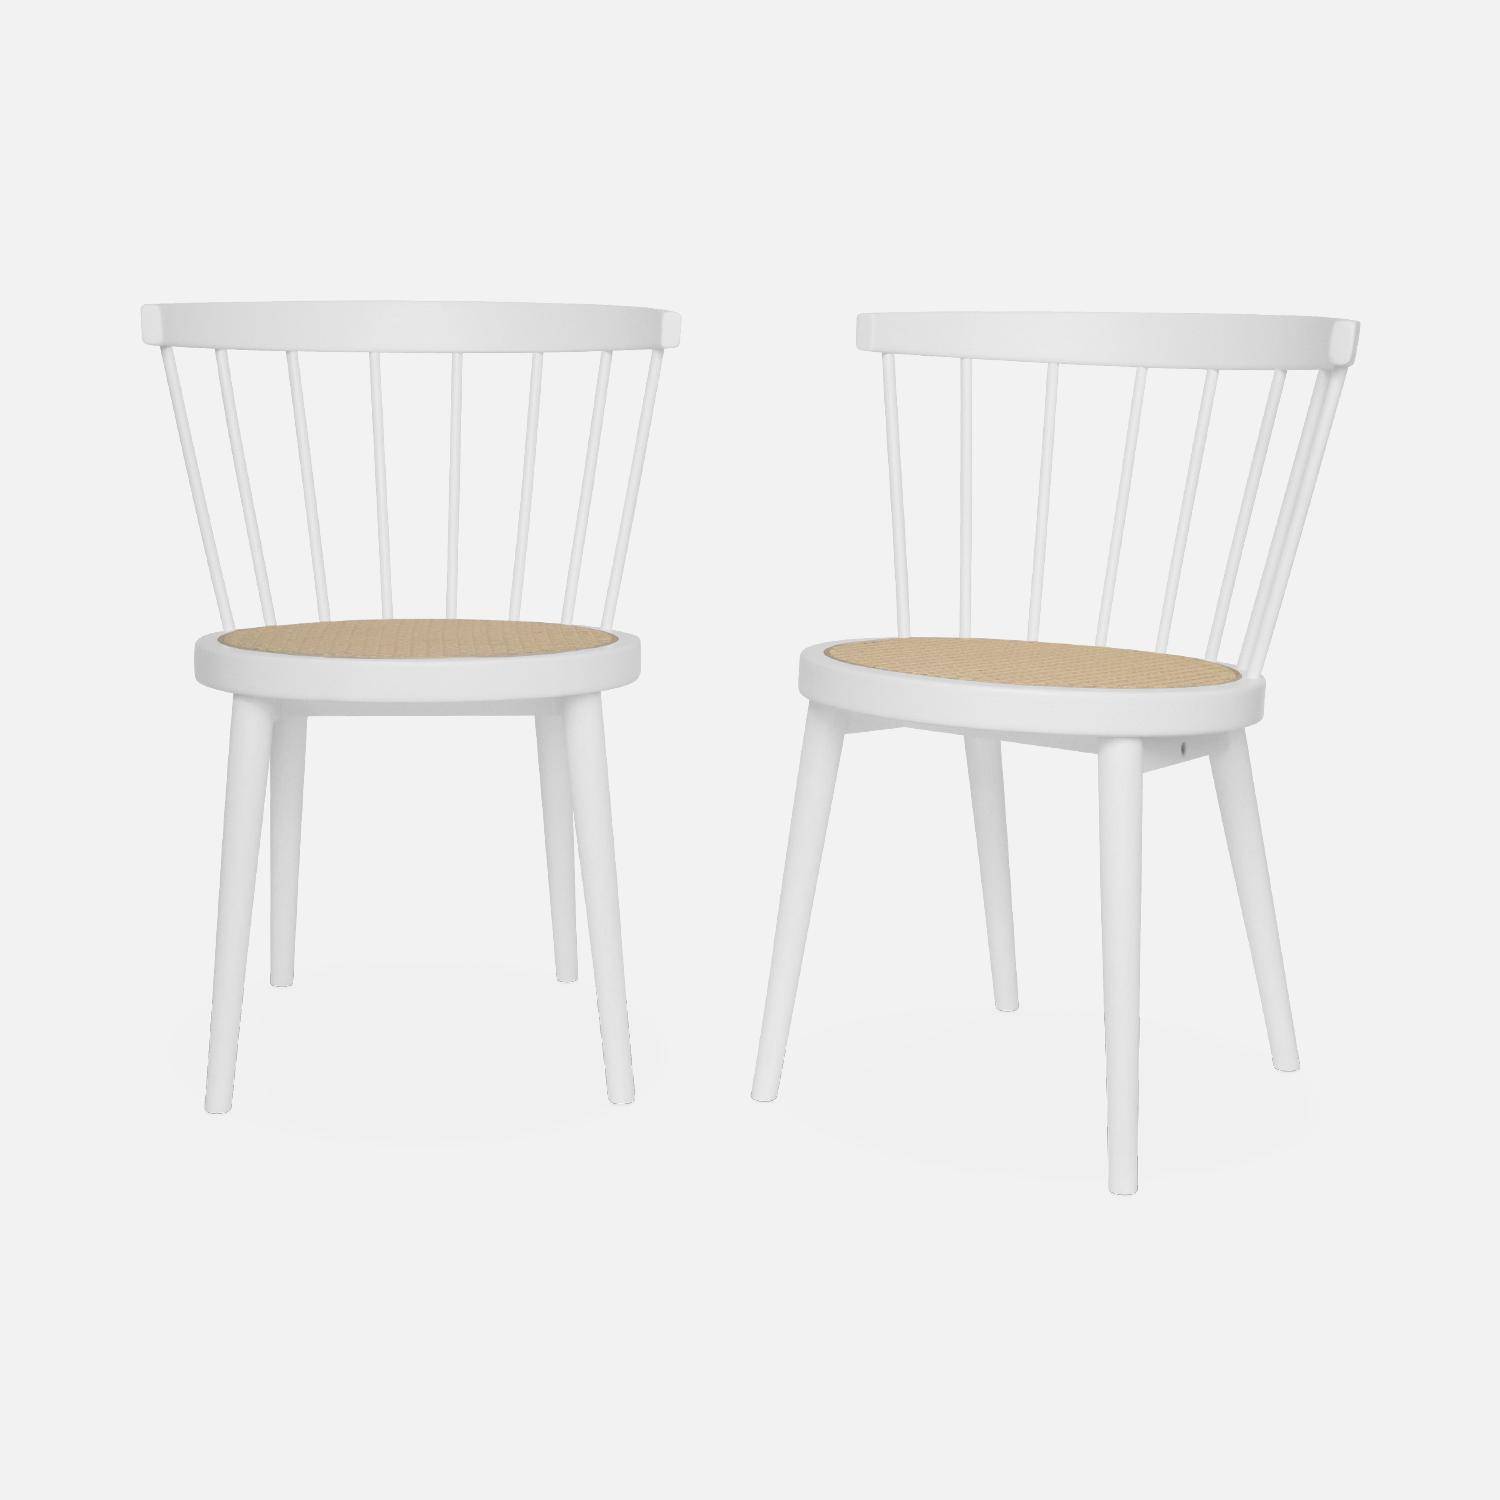 Pair of  Wood and Cane Chairs, Bohemian Spirit, White, L53 x W53.5 x H 6 cm,sweeek,Photo3